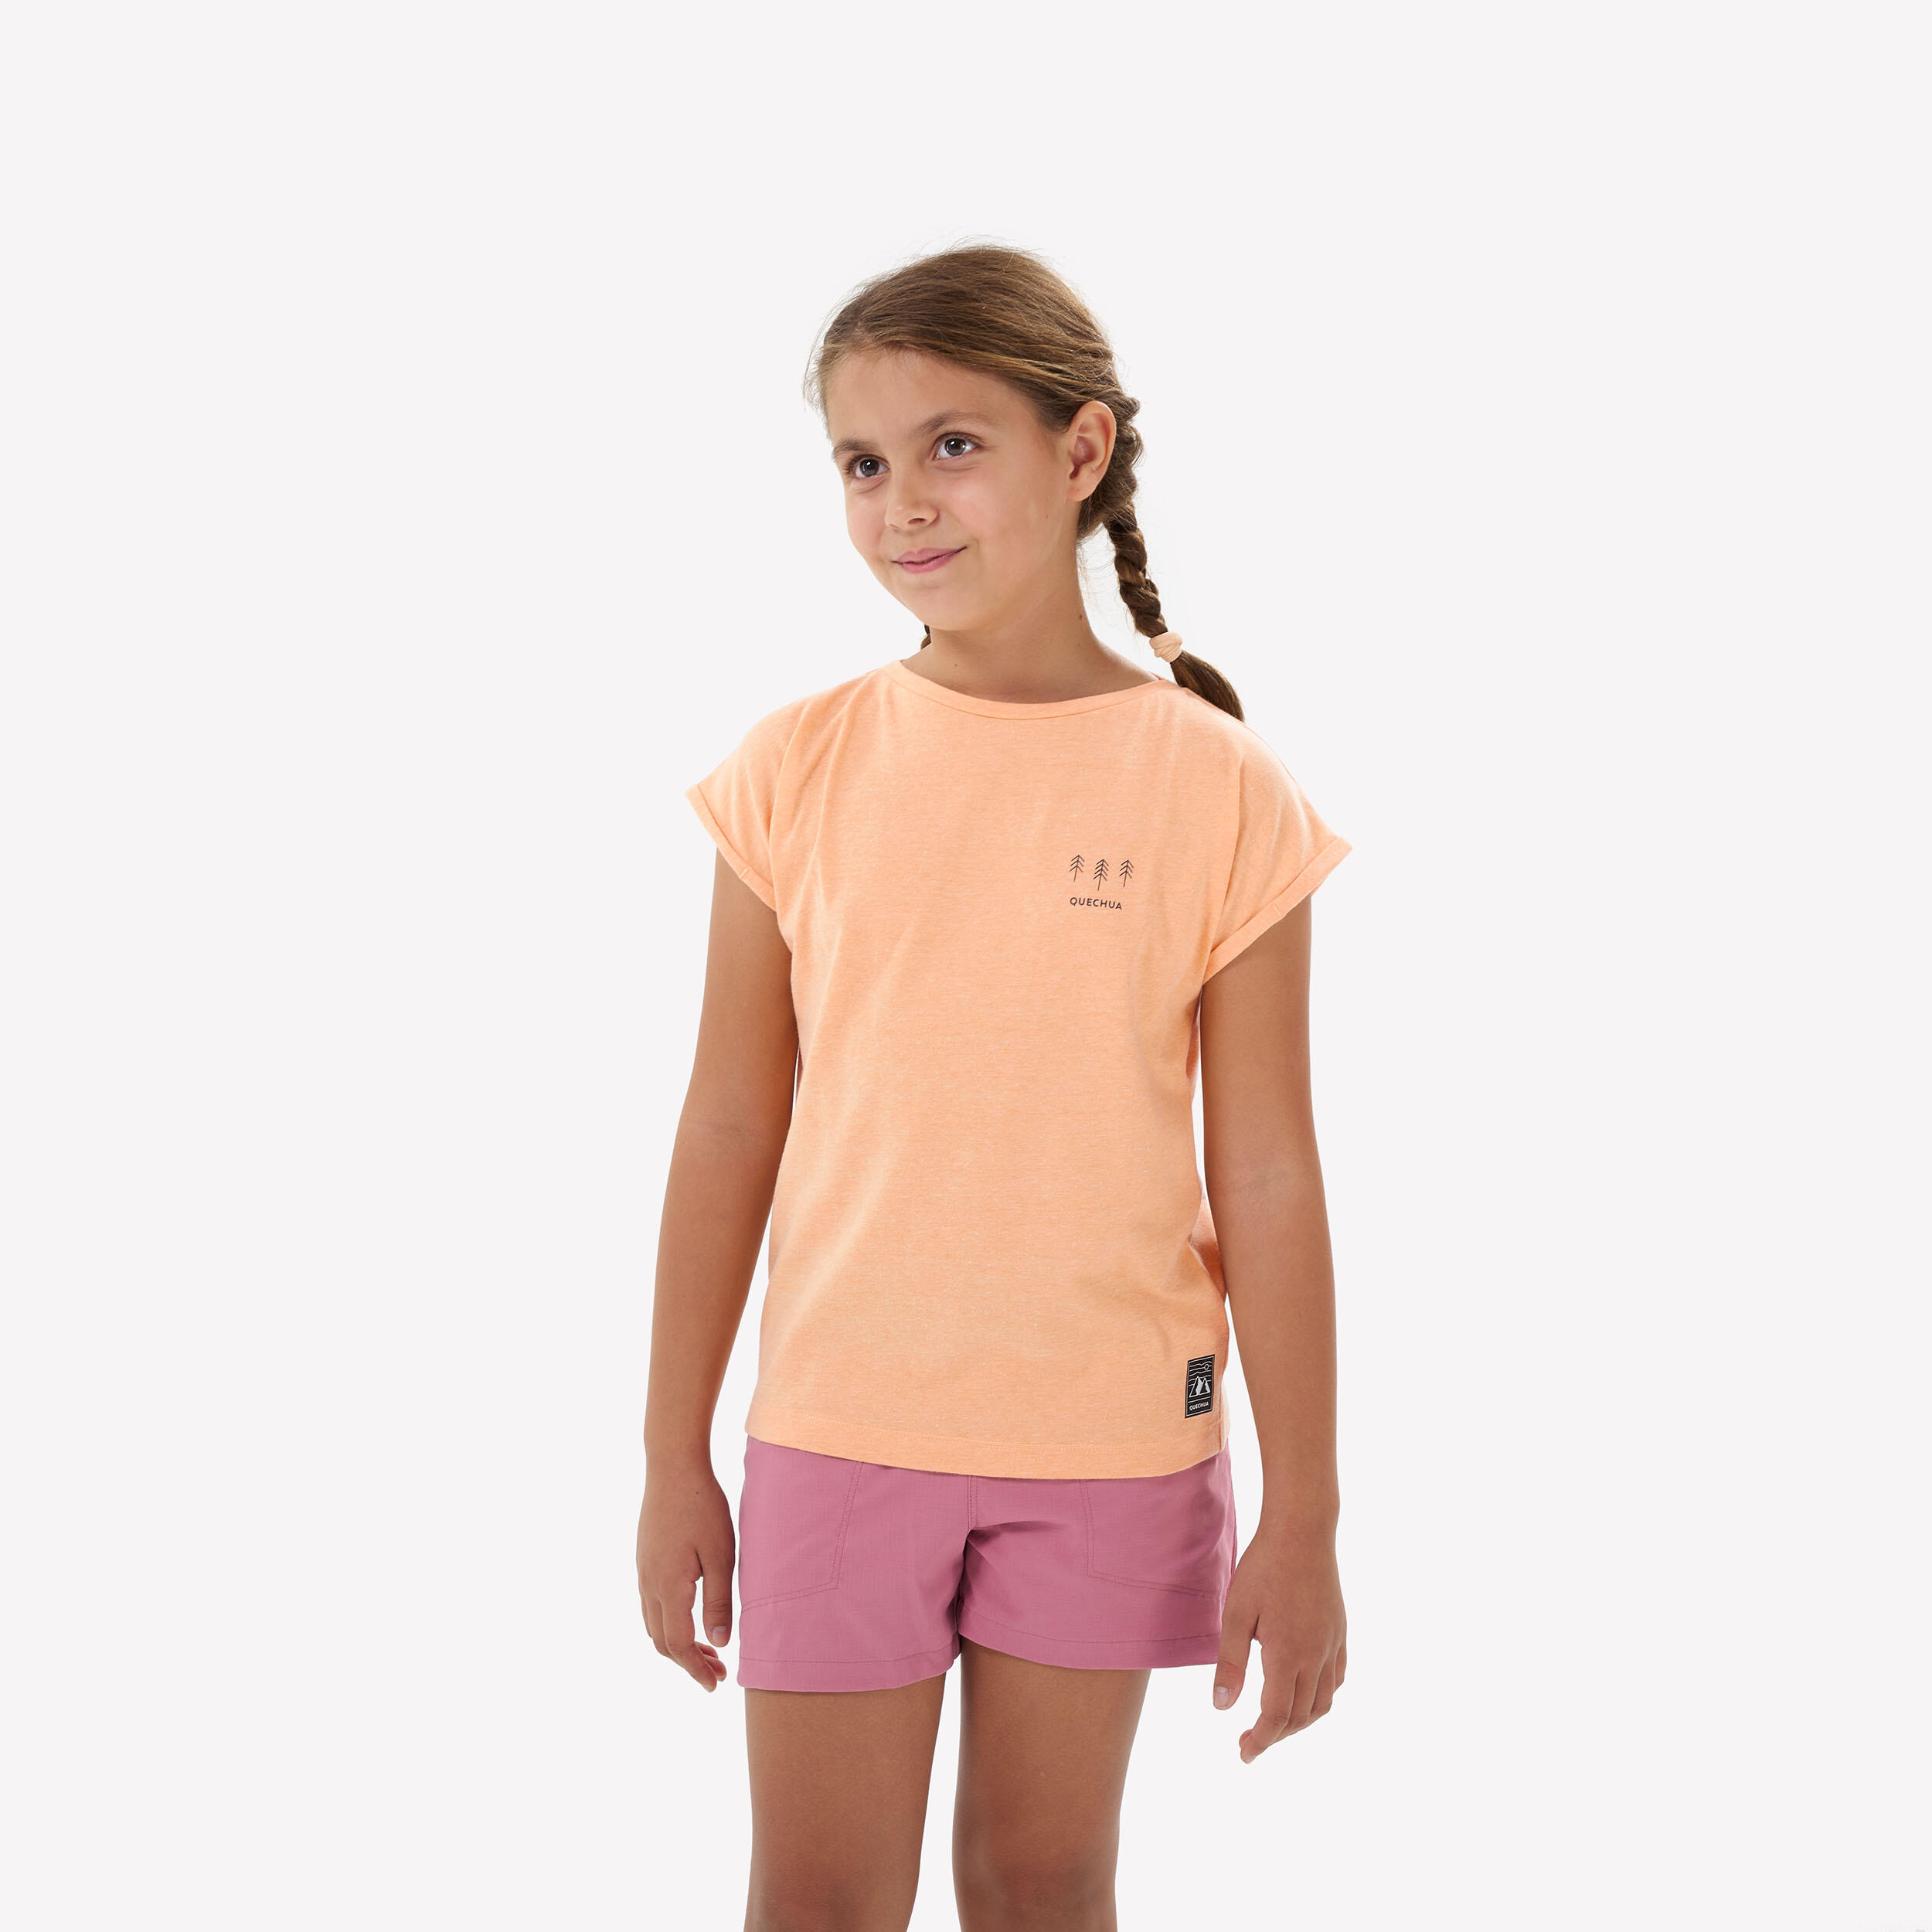 QUECHUA Girls’ Hiking T-shirt - MH100 Ages 7-15 - Orange